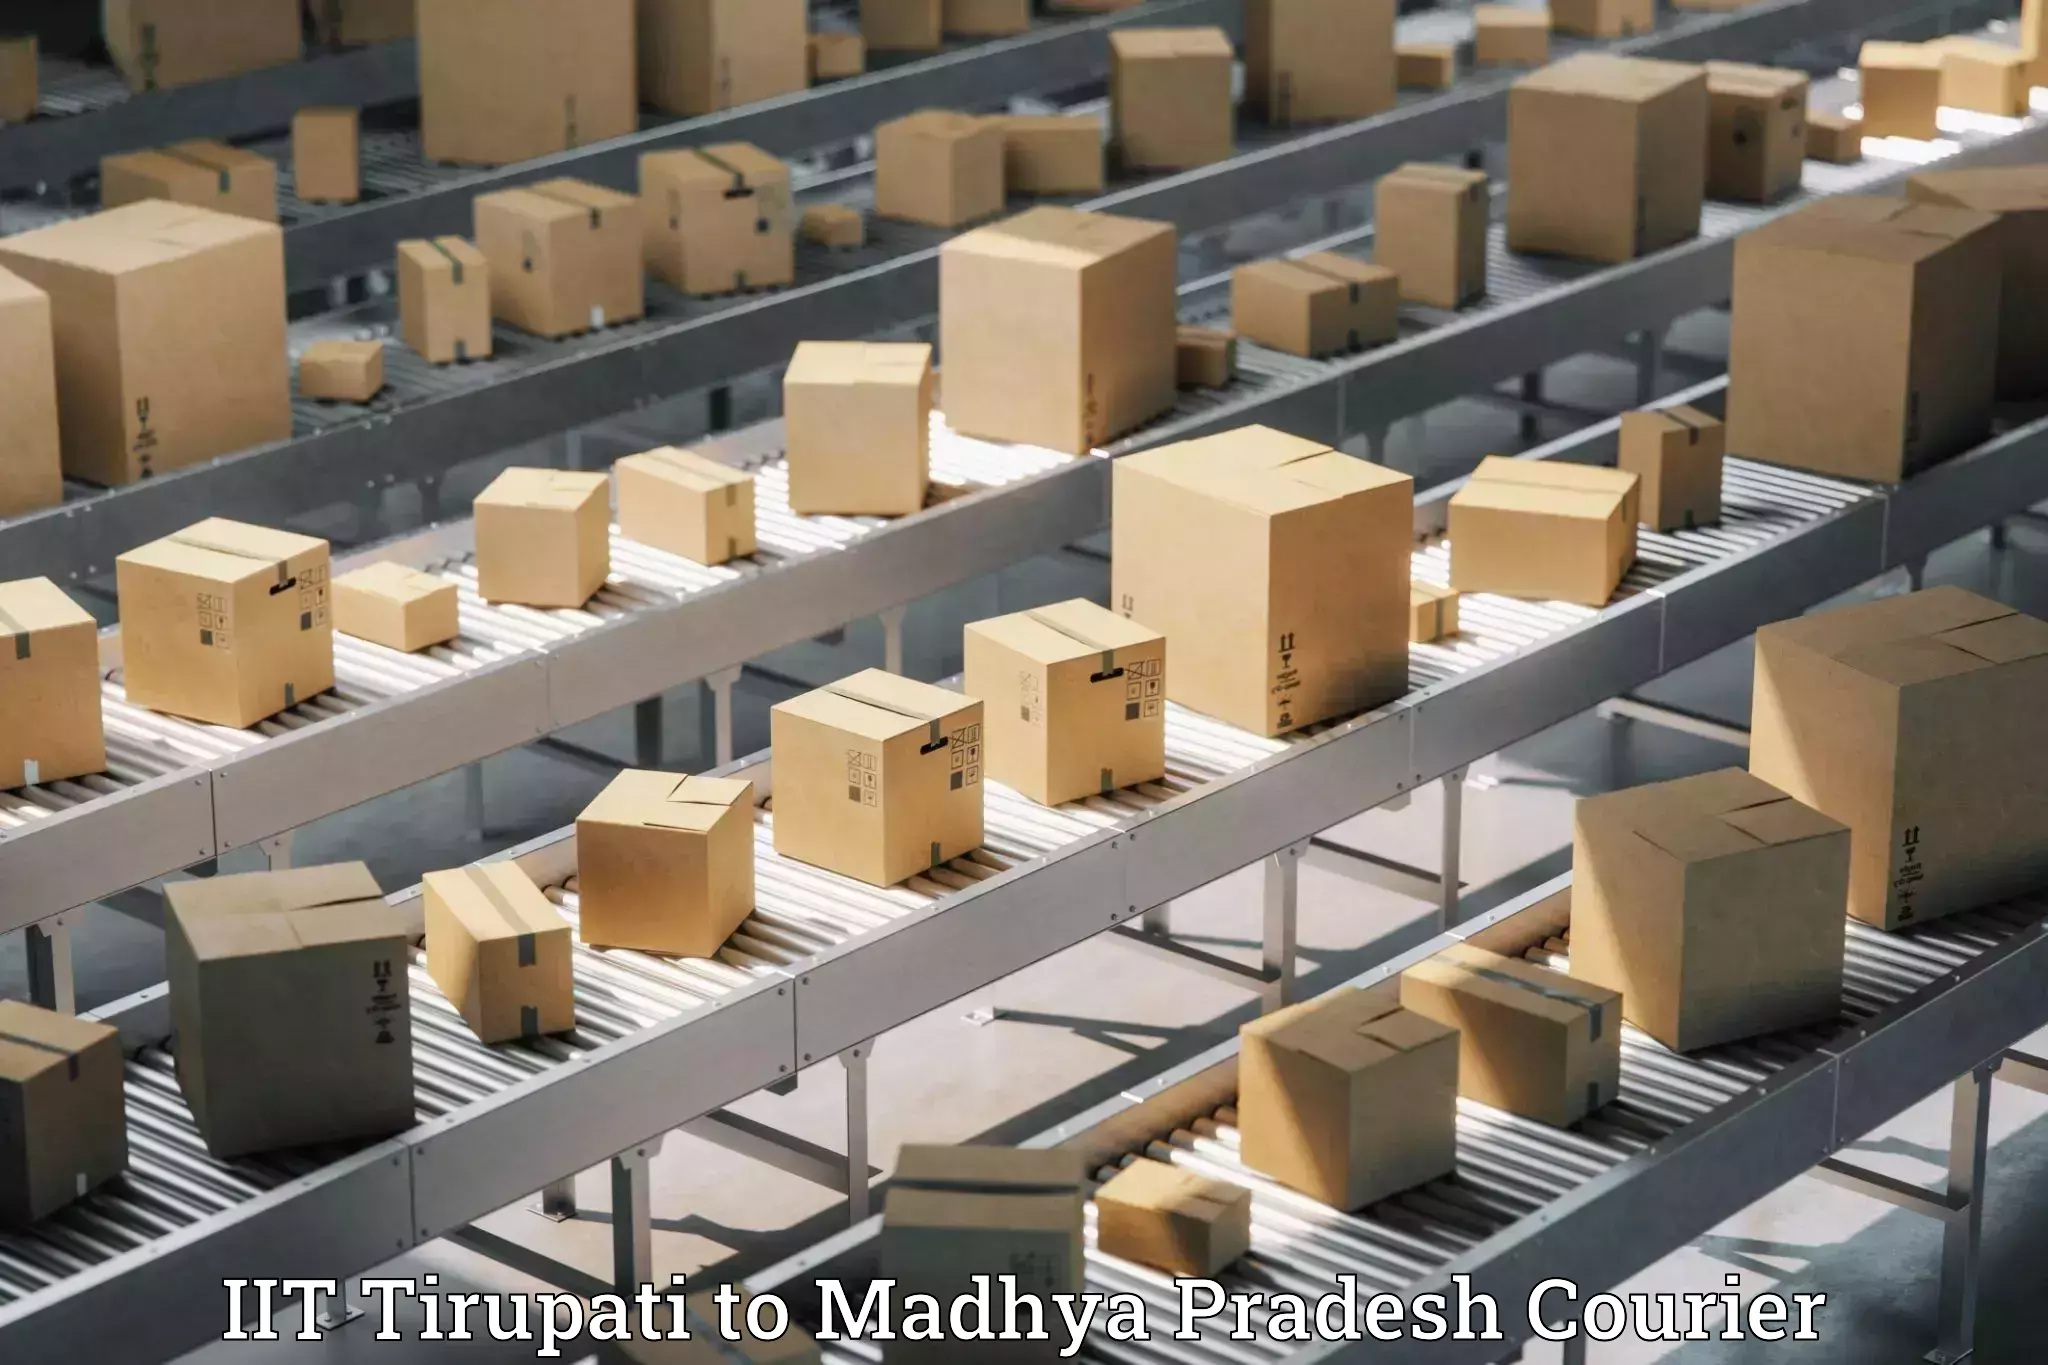 Courier service comparison IIT Tirupati to Madhya Pradesh